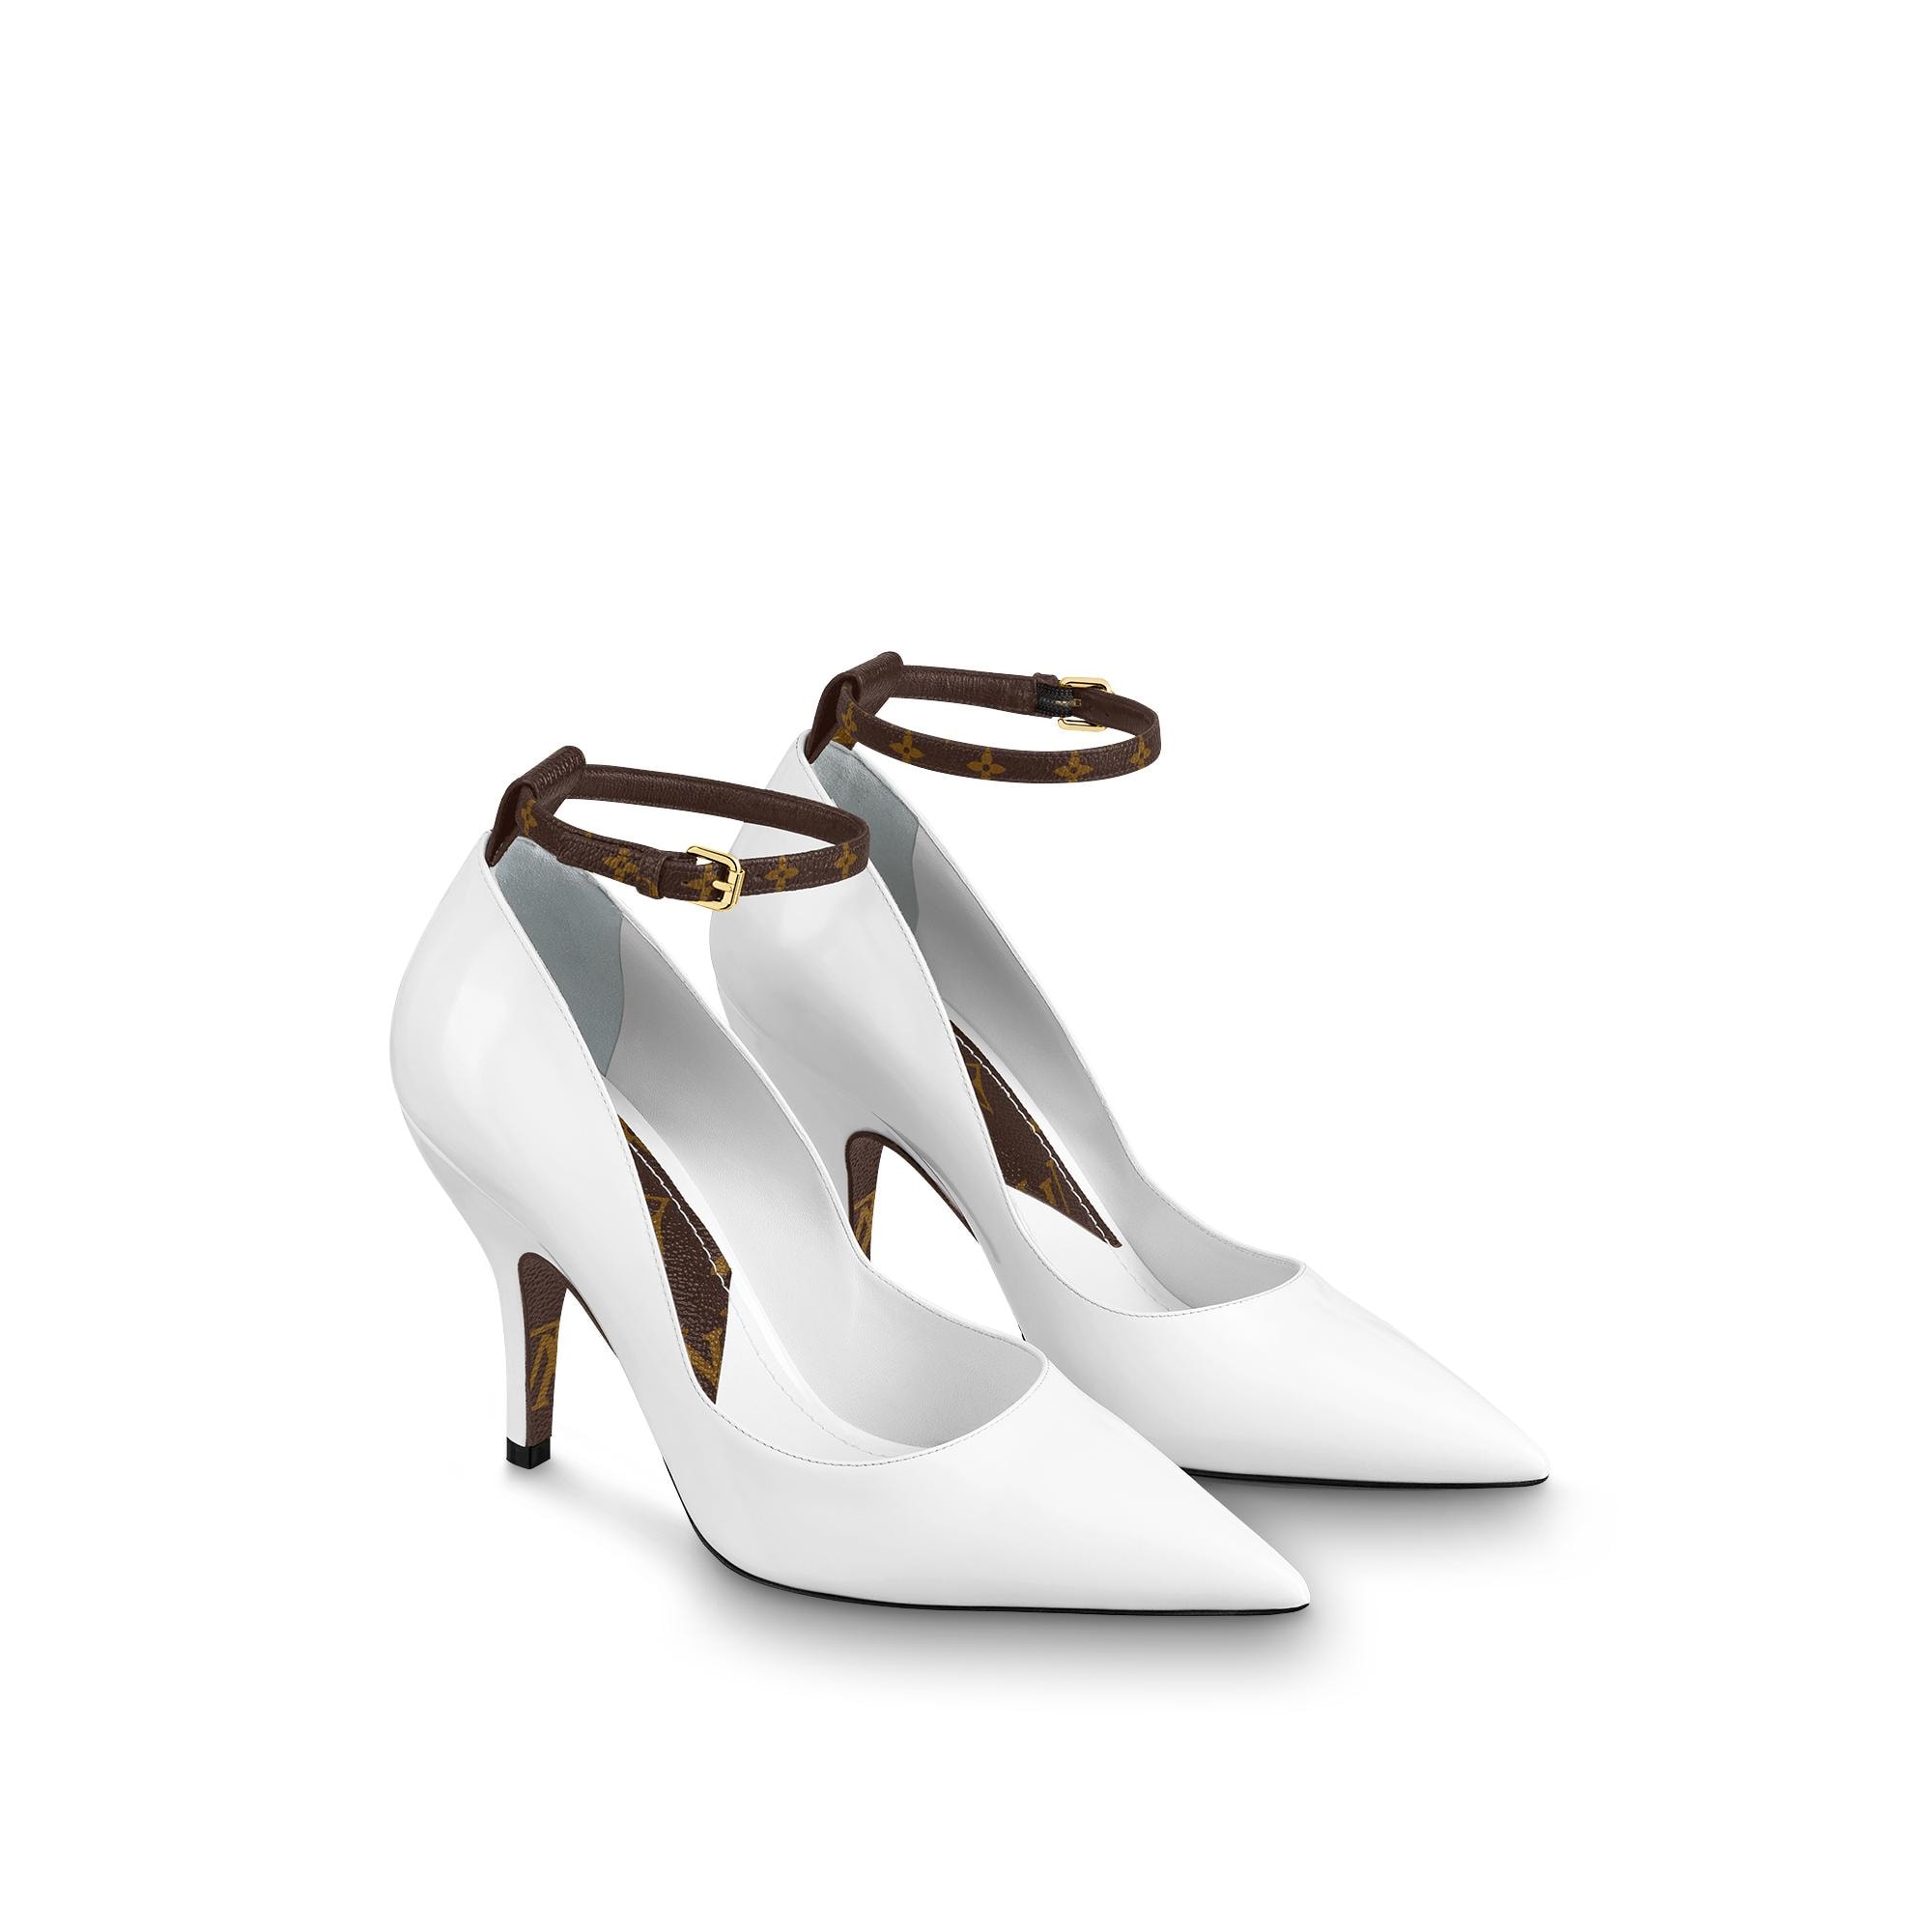 Louis Vuitton Attitude Pump in White - Shoes 1A8MTH - $137.80 